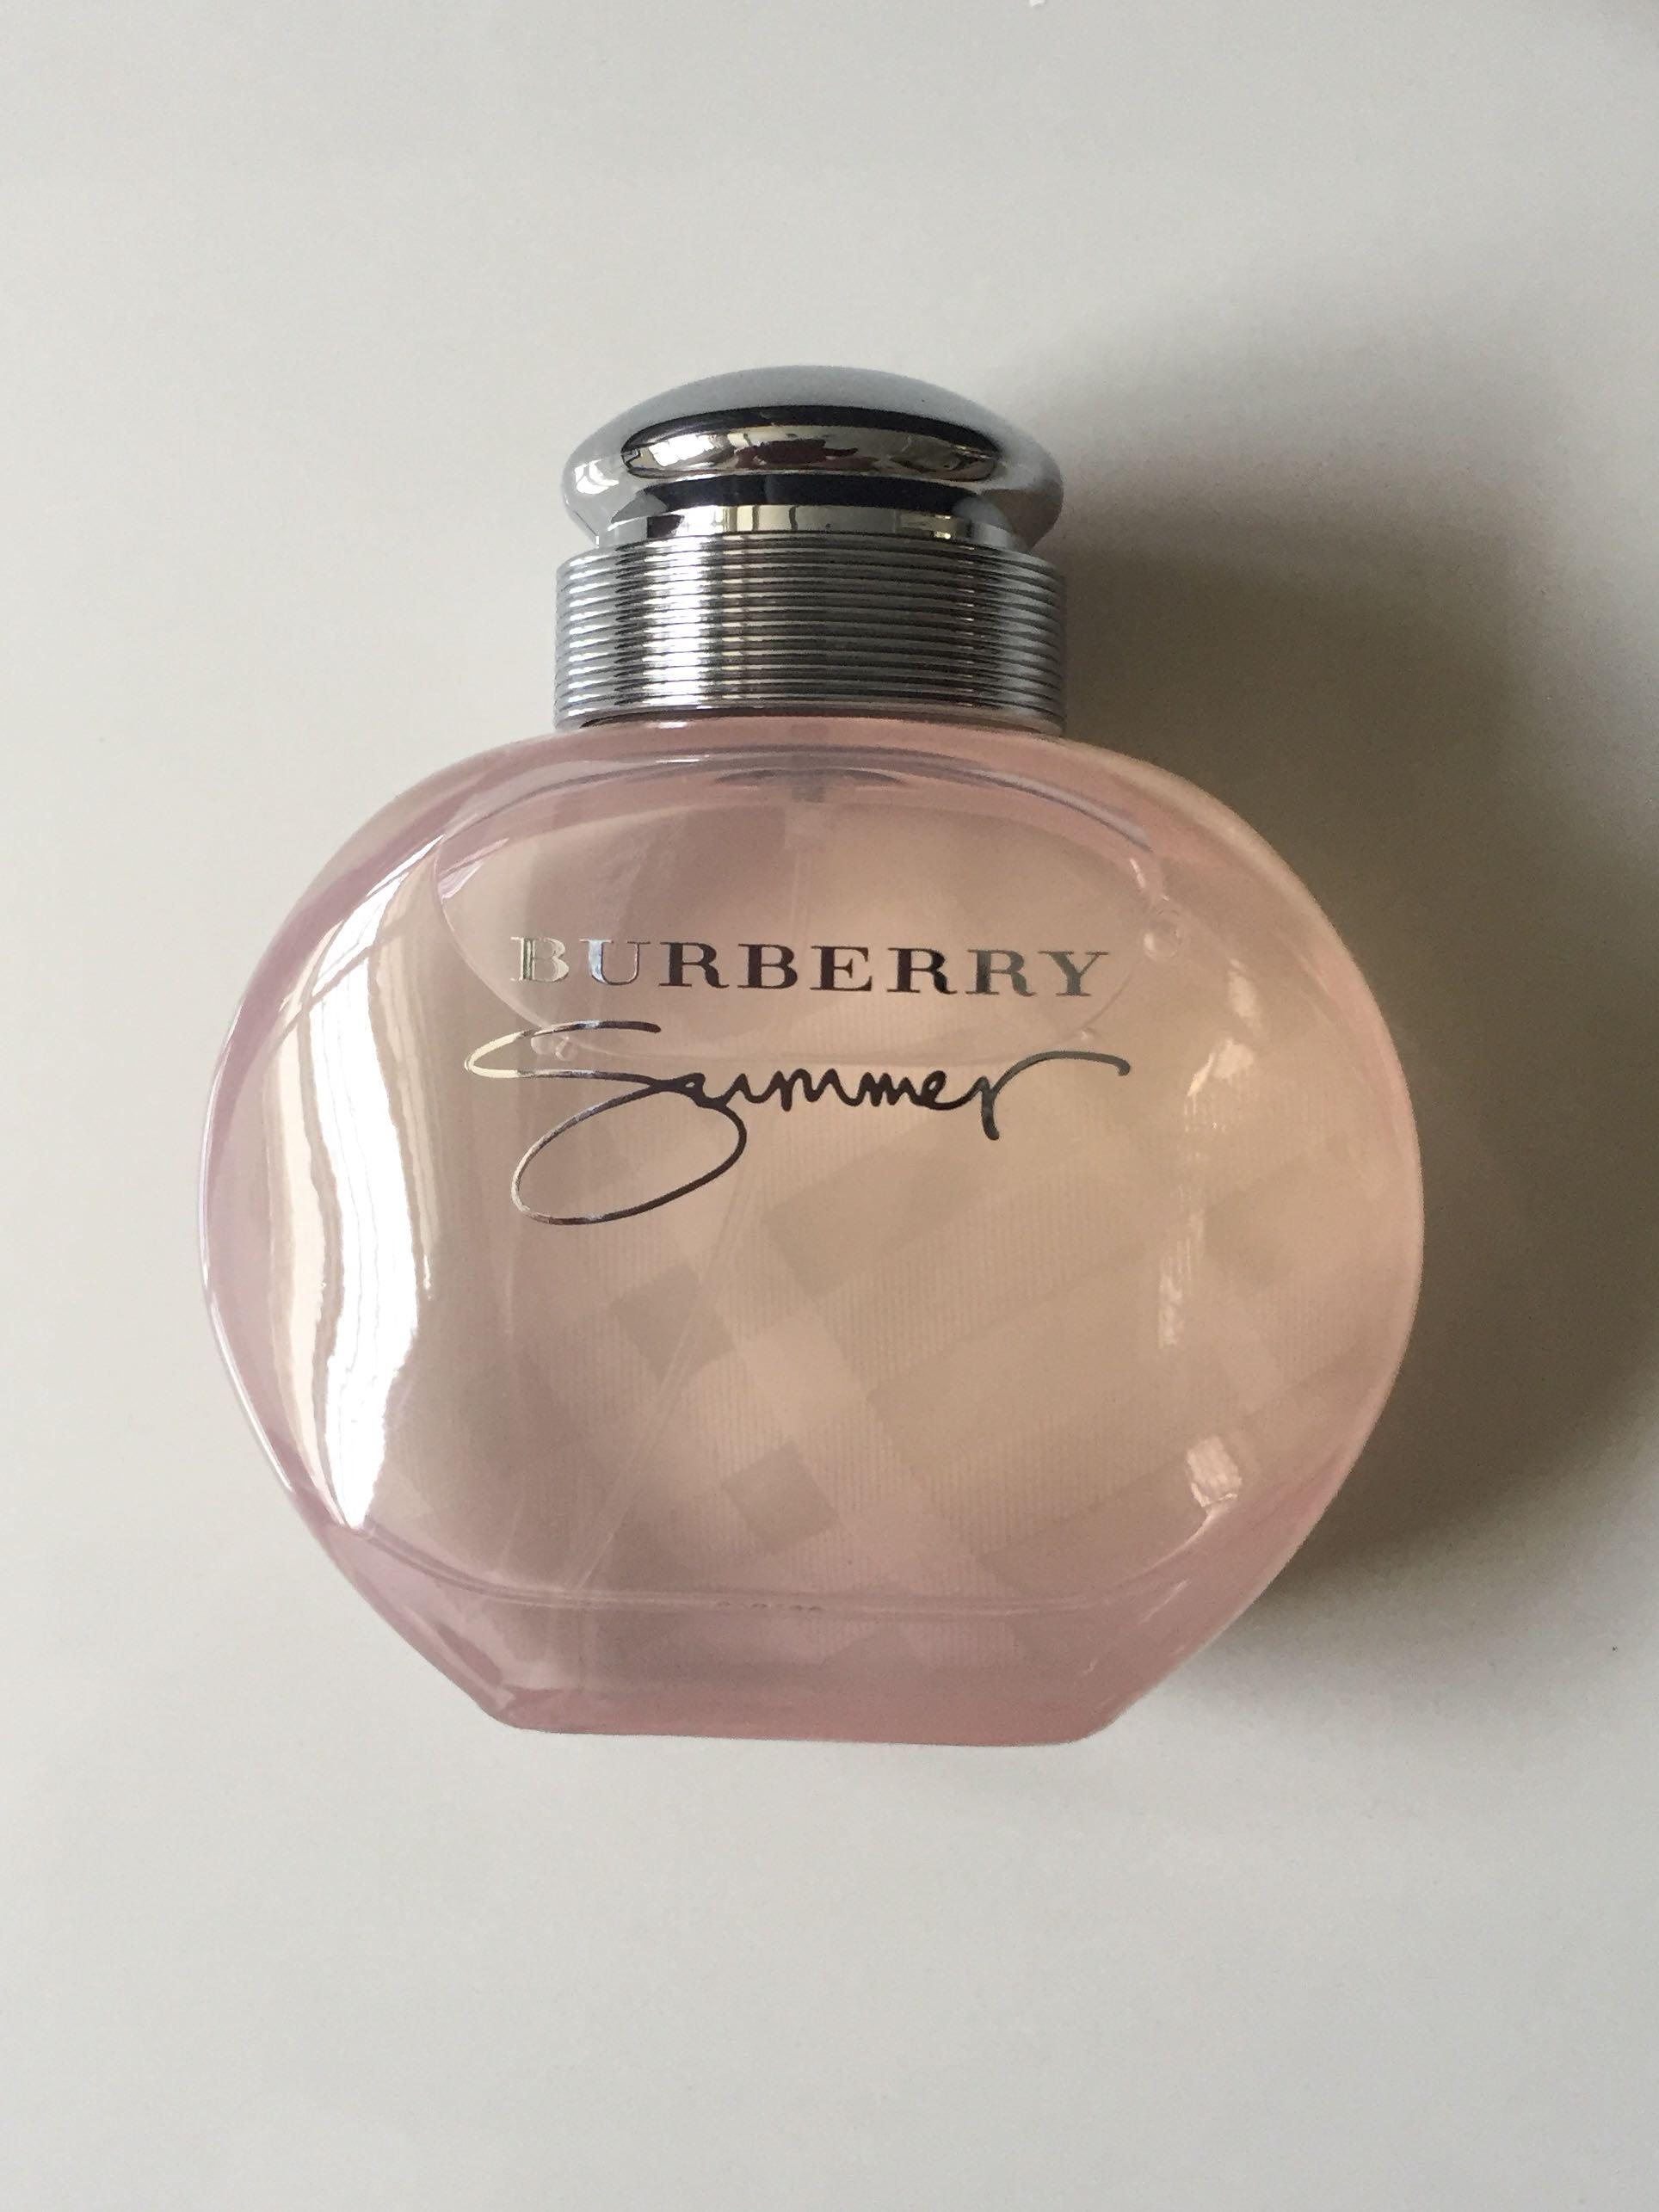 Burberry summer perfume, Health 